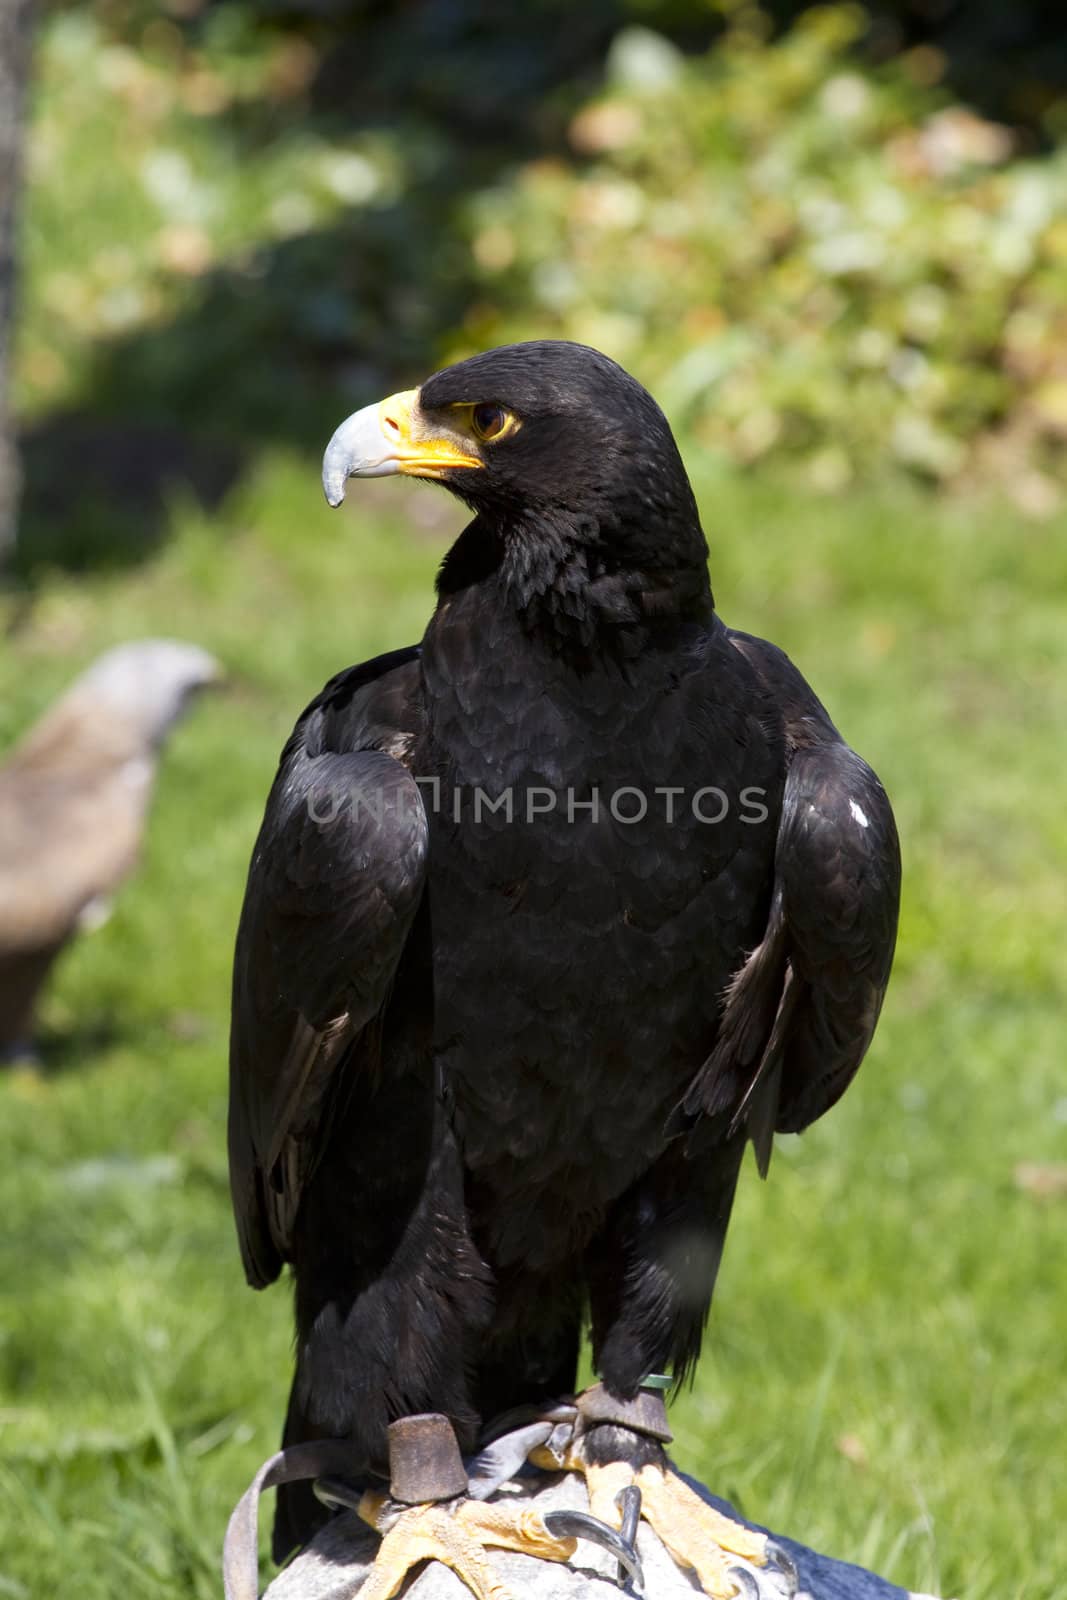 Black eagle by FernandoCortes